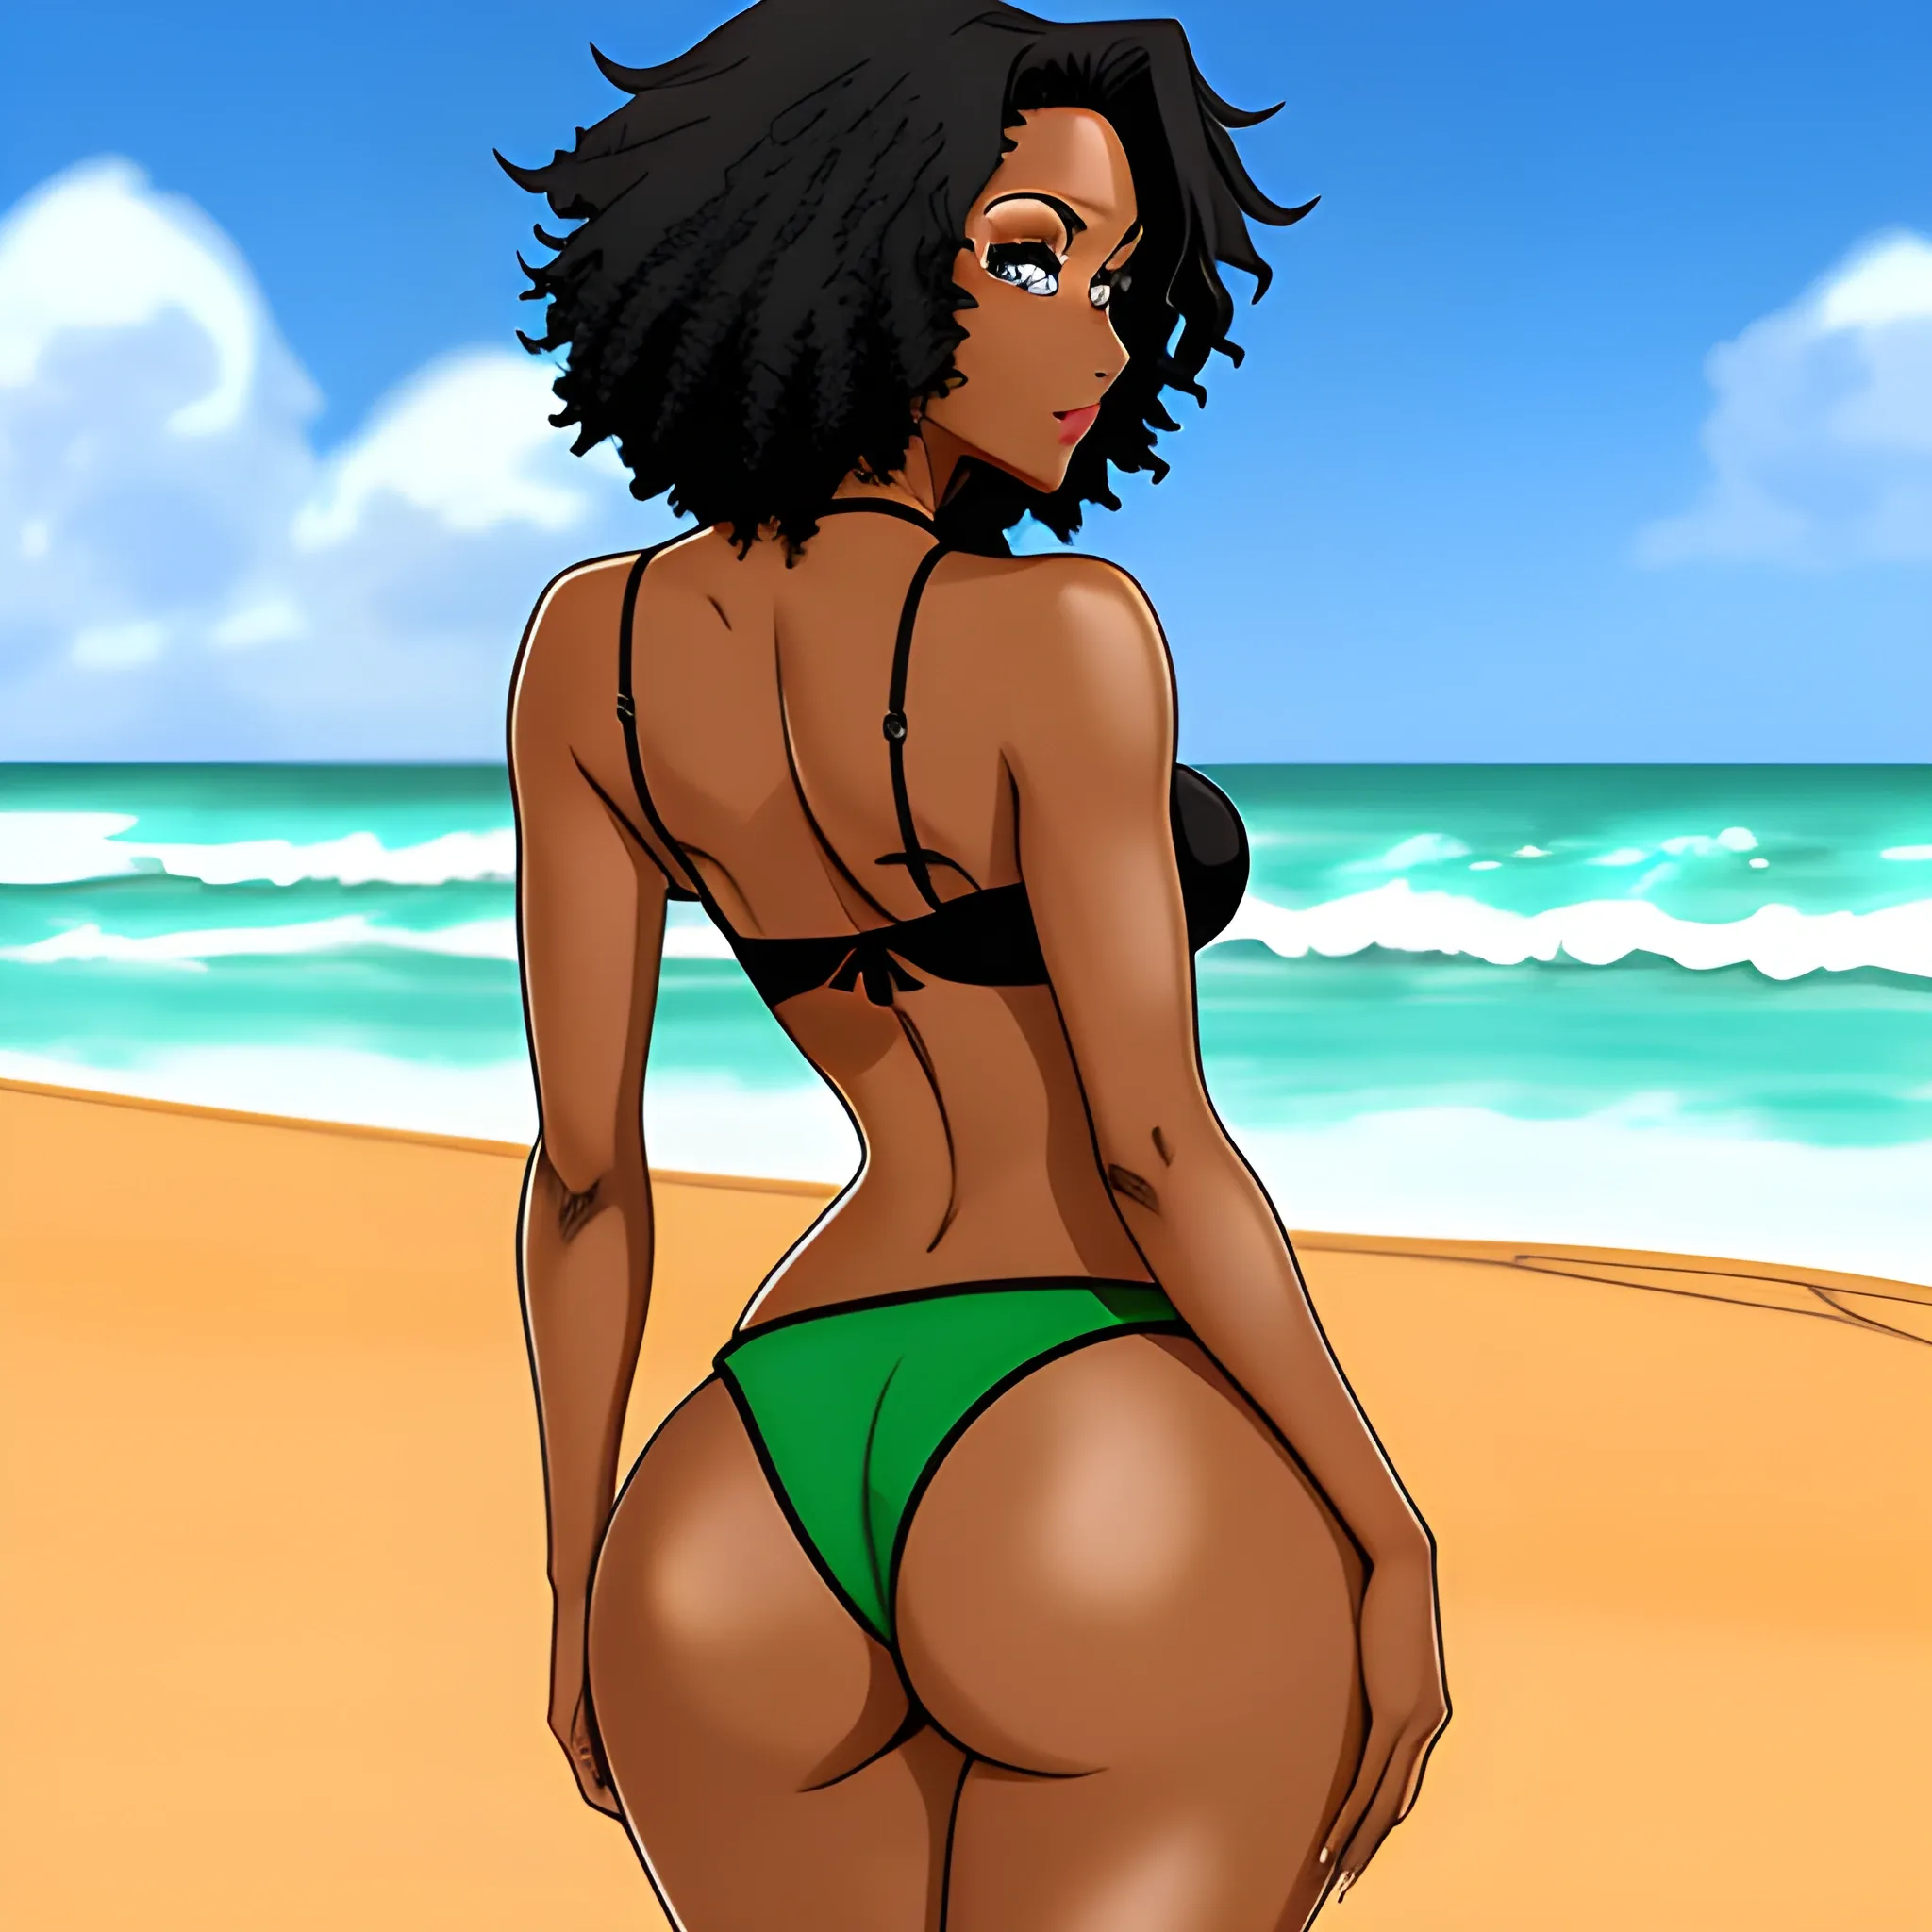 Anime,beach,rear view, brownskin,cute girl,black curly hair,green bra, green panties,cartoon,hand under butt

